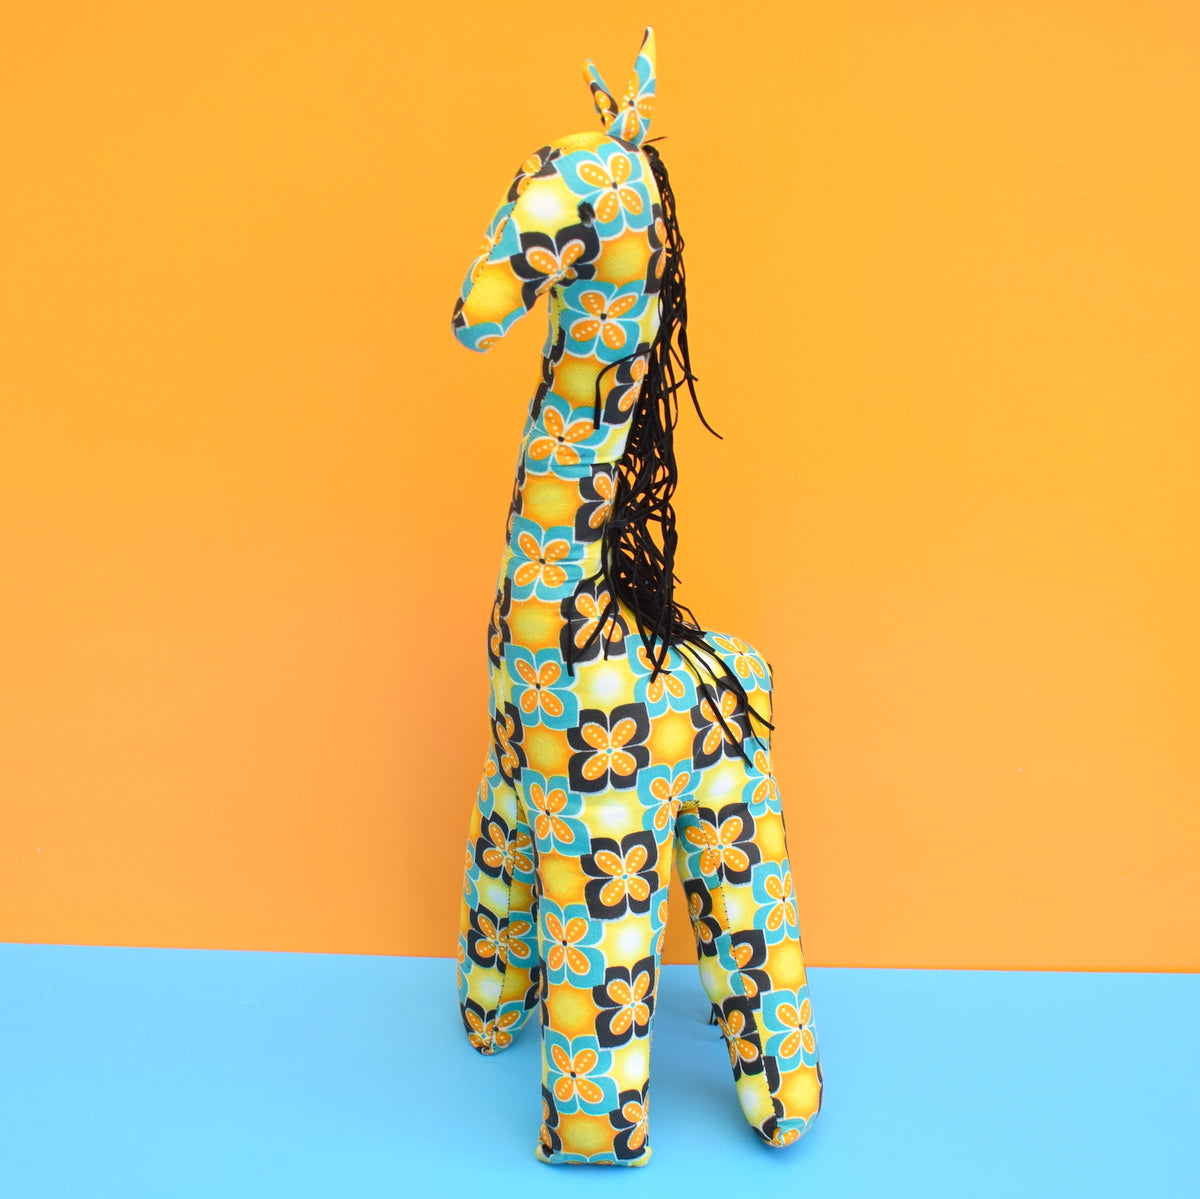 Vintage 1970s Giraffe Toy - Handmade - Flower Power